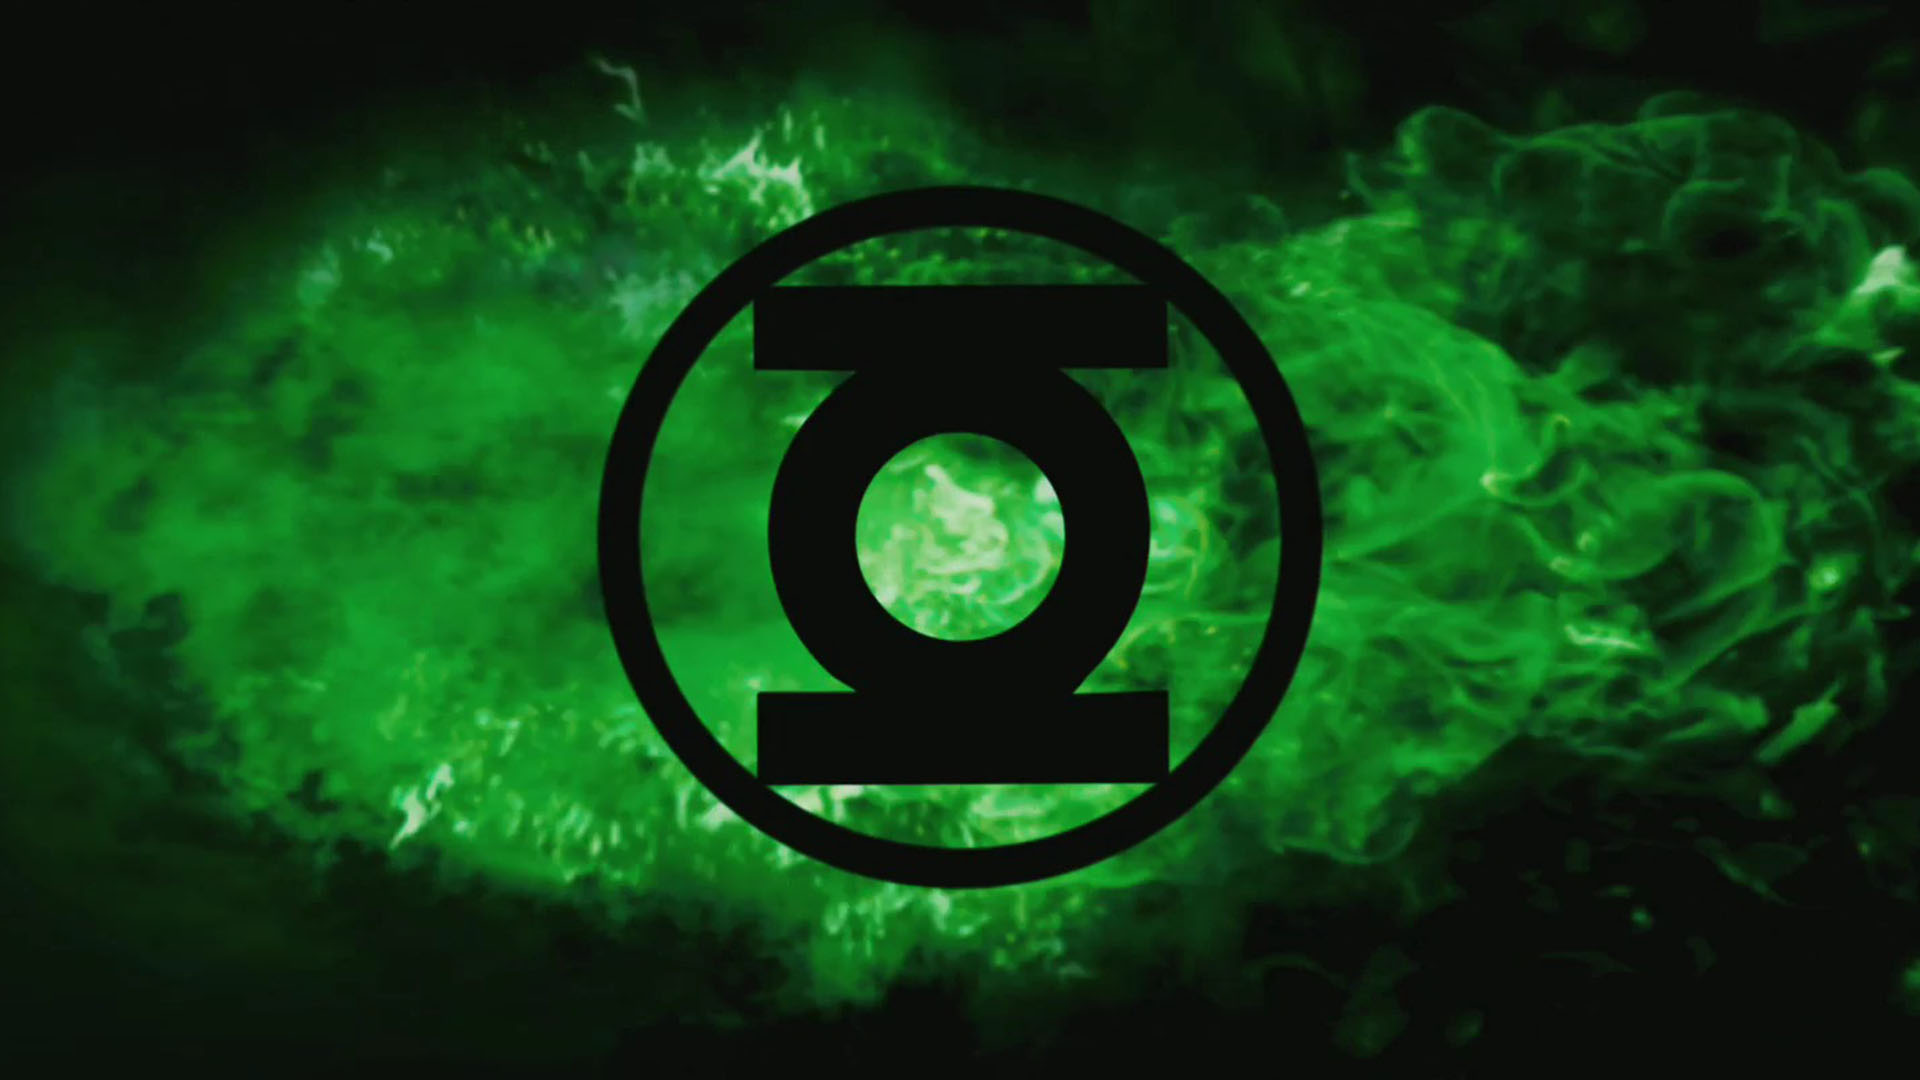 Green Lantern Logo Wallpaper 5922 Hd Wallpapers in Logos   Imagesci 1920x1080